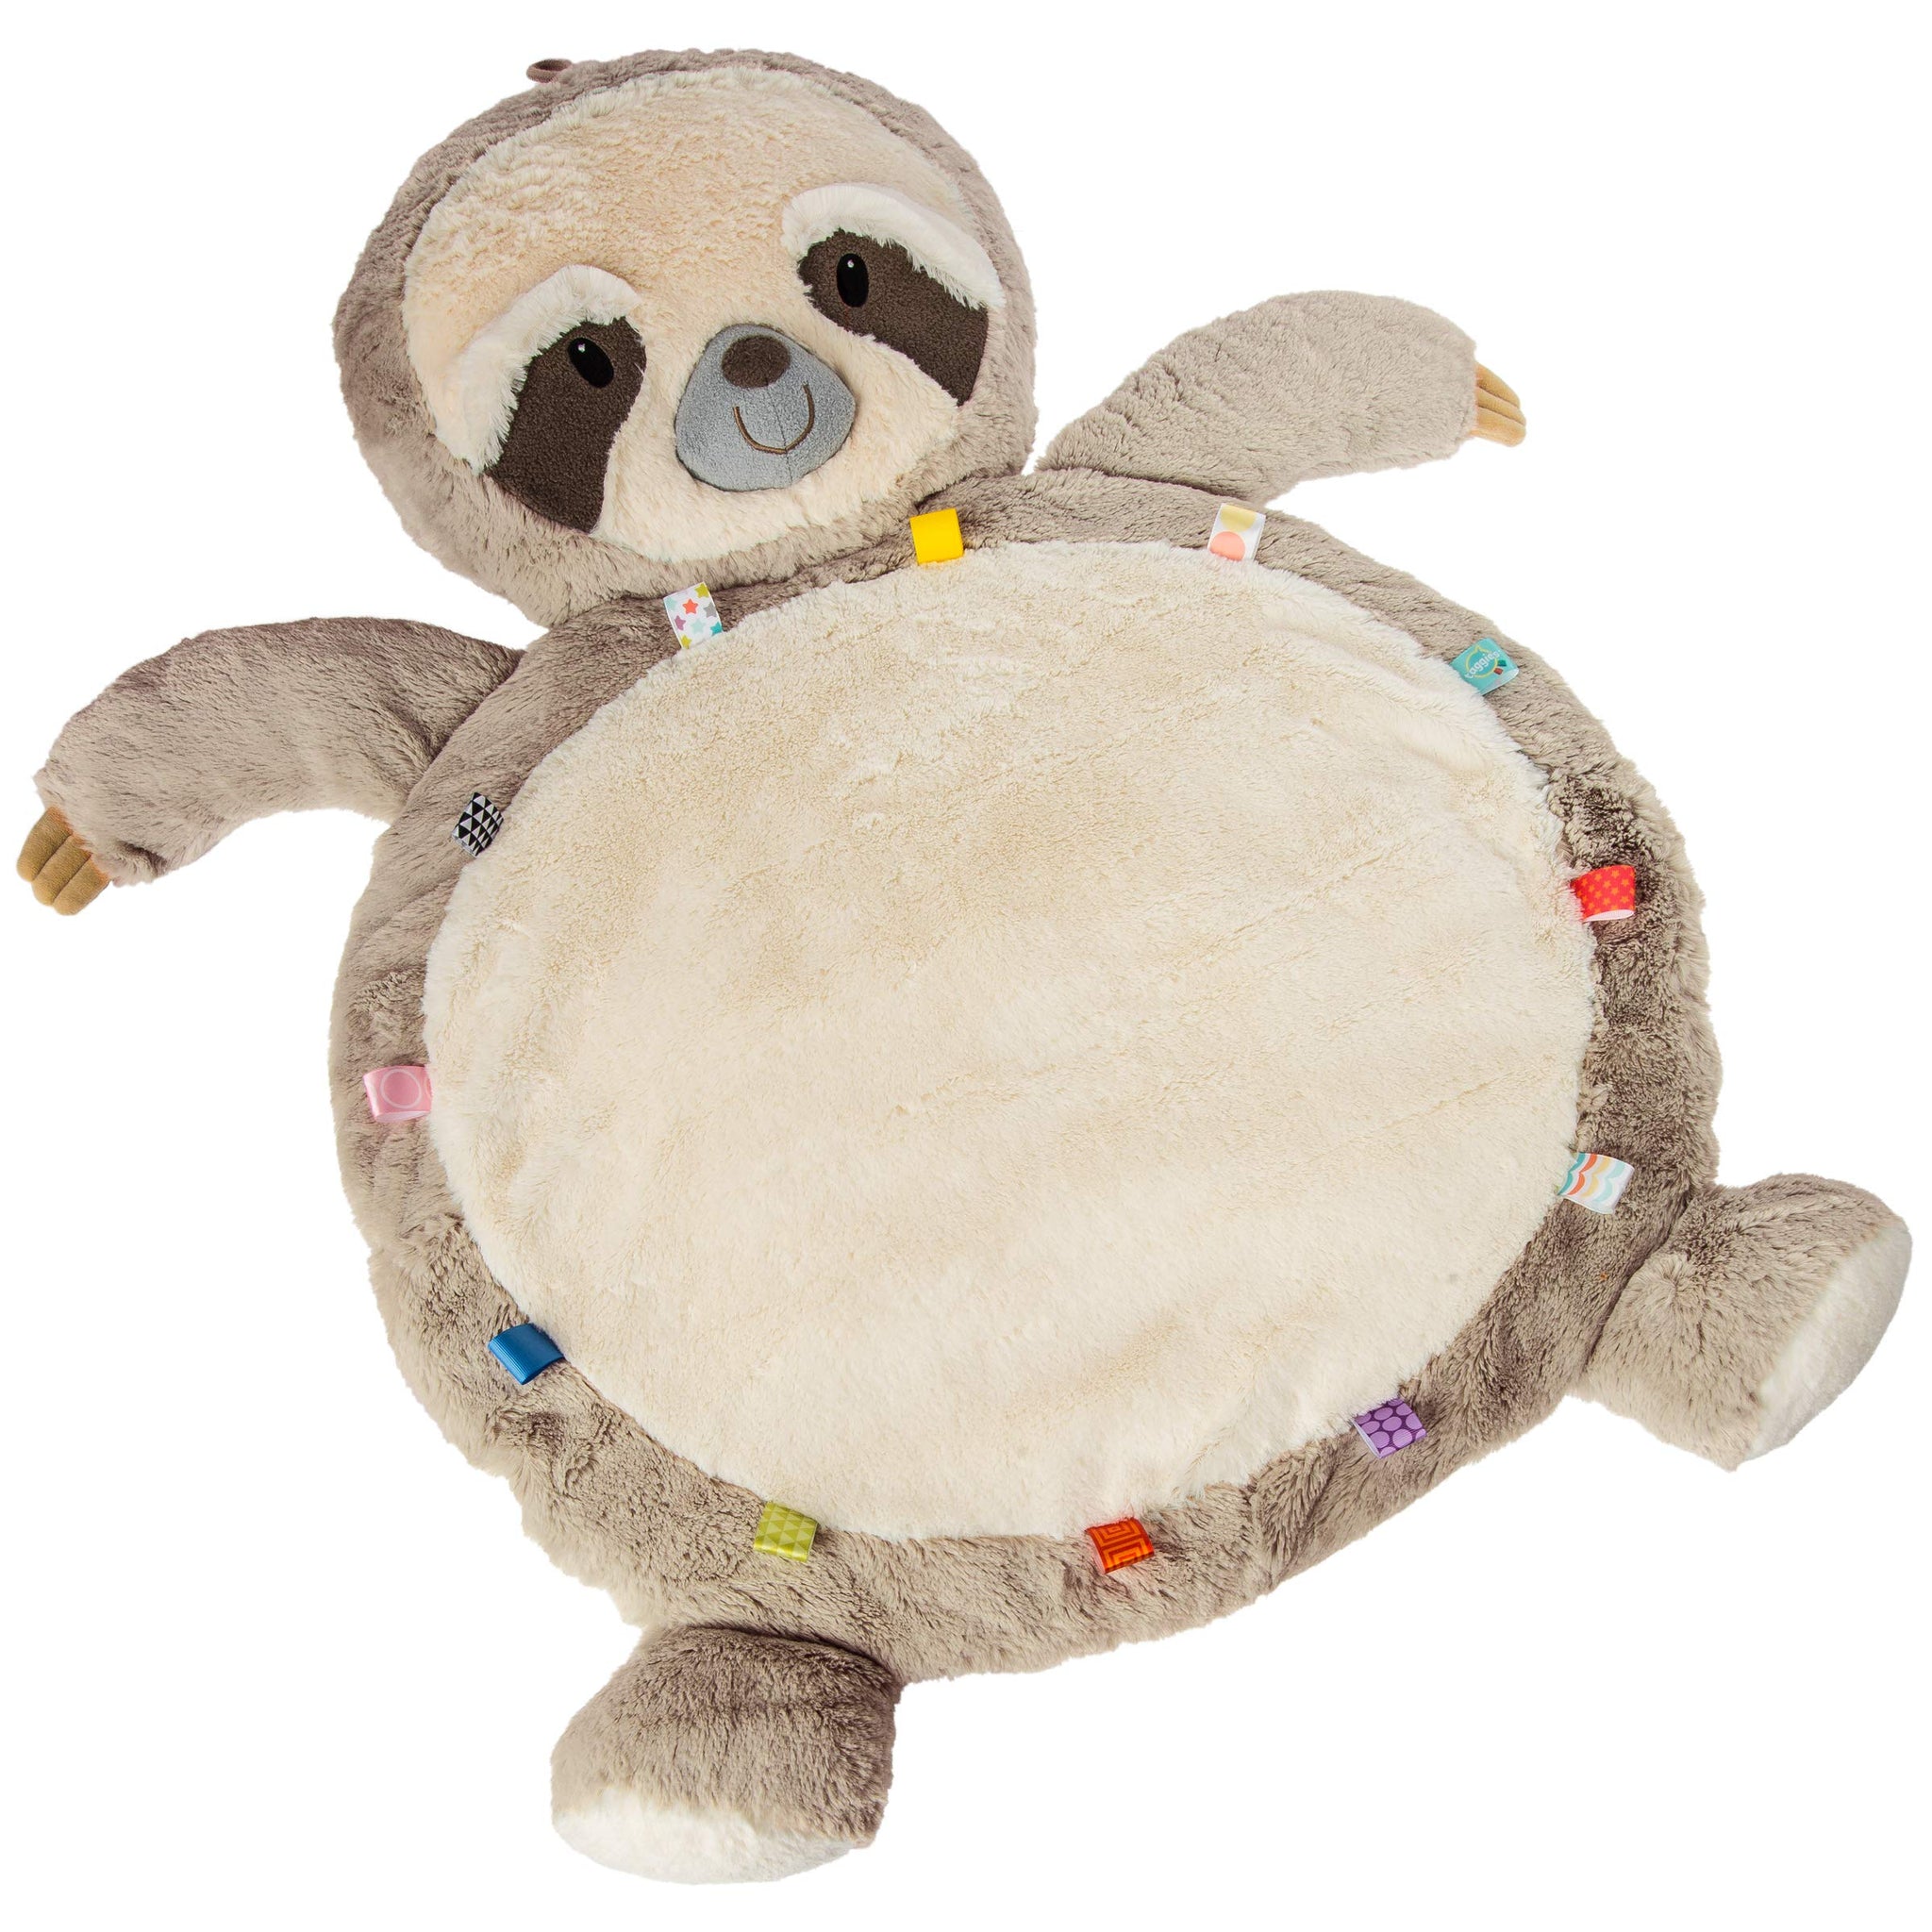 Tapete para bebé - Molasses Sloth Baby Mat